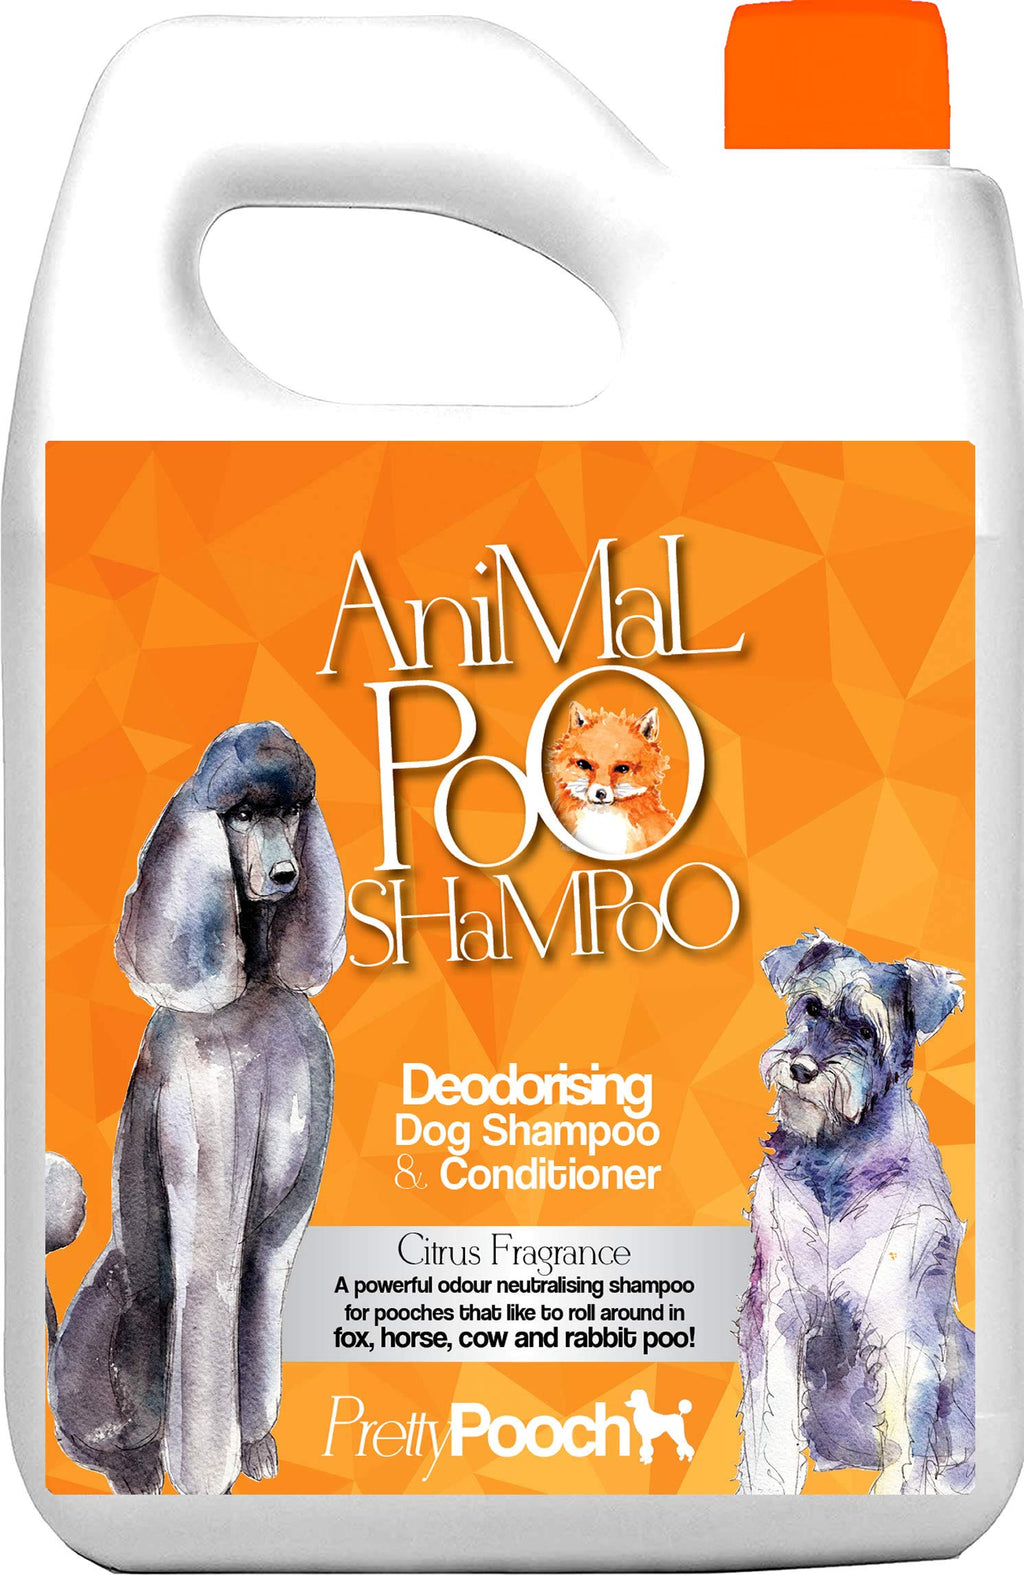 Pretty Pooch Fox Poo Dog Shampoo & Conditioner for Smelly Dogs - 2 Litres (Citrus Fragrance) - Sensitive Deodorising Dog Shampoo - Eliminates Fox Poo & Other Odours - PawsPlanet Australia